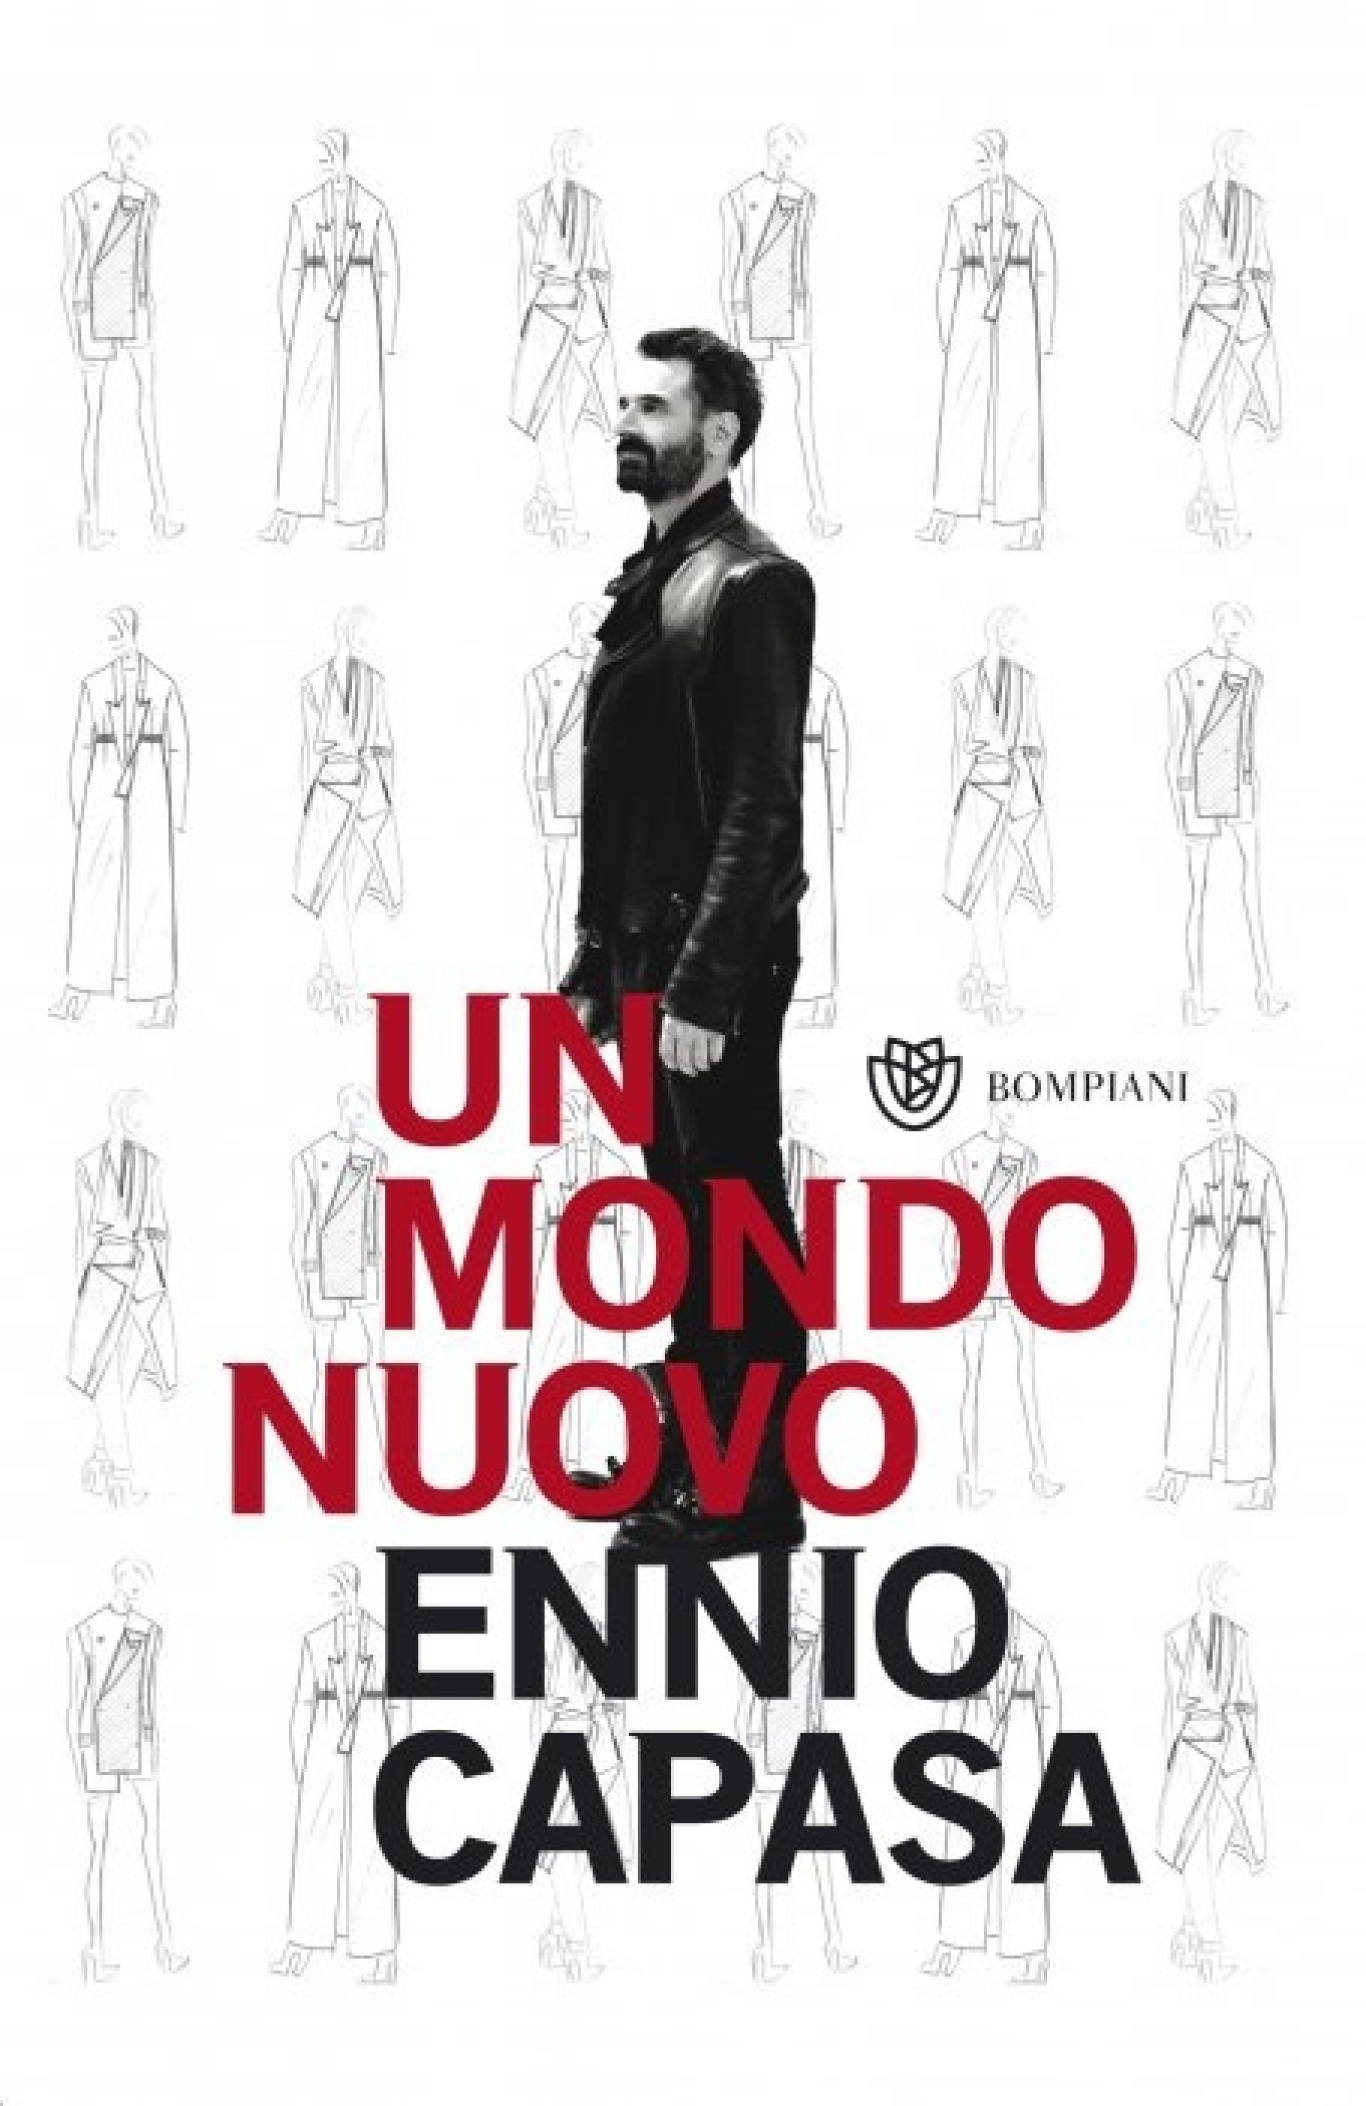 Ennio Capasa narrates "A new world"